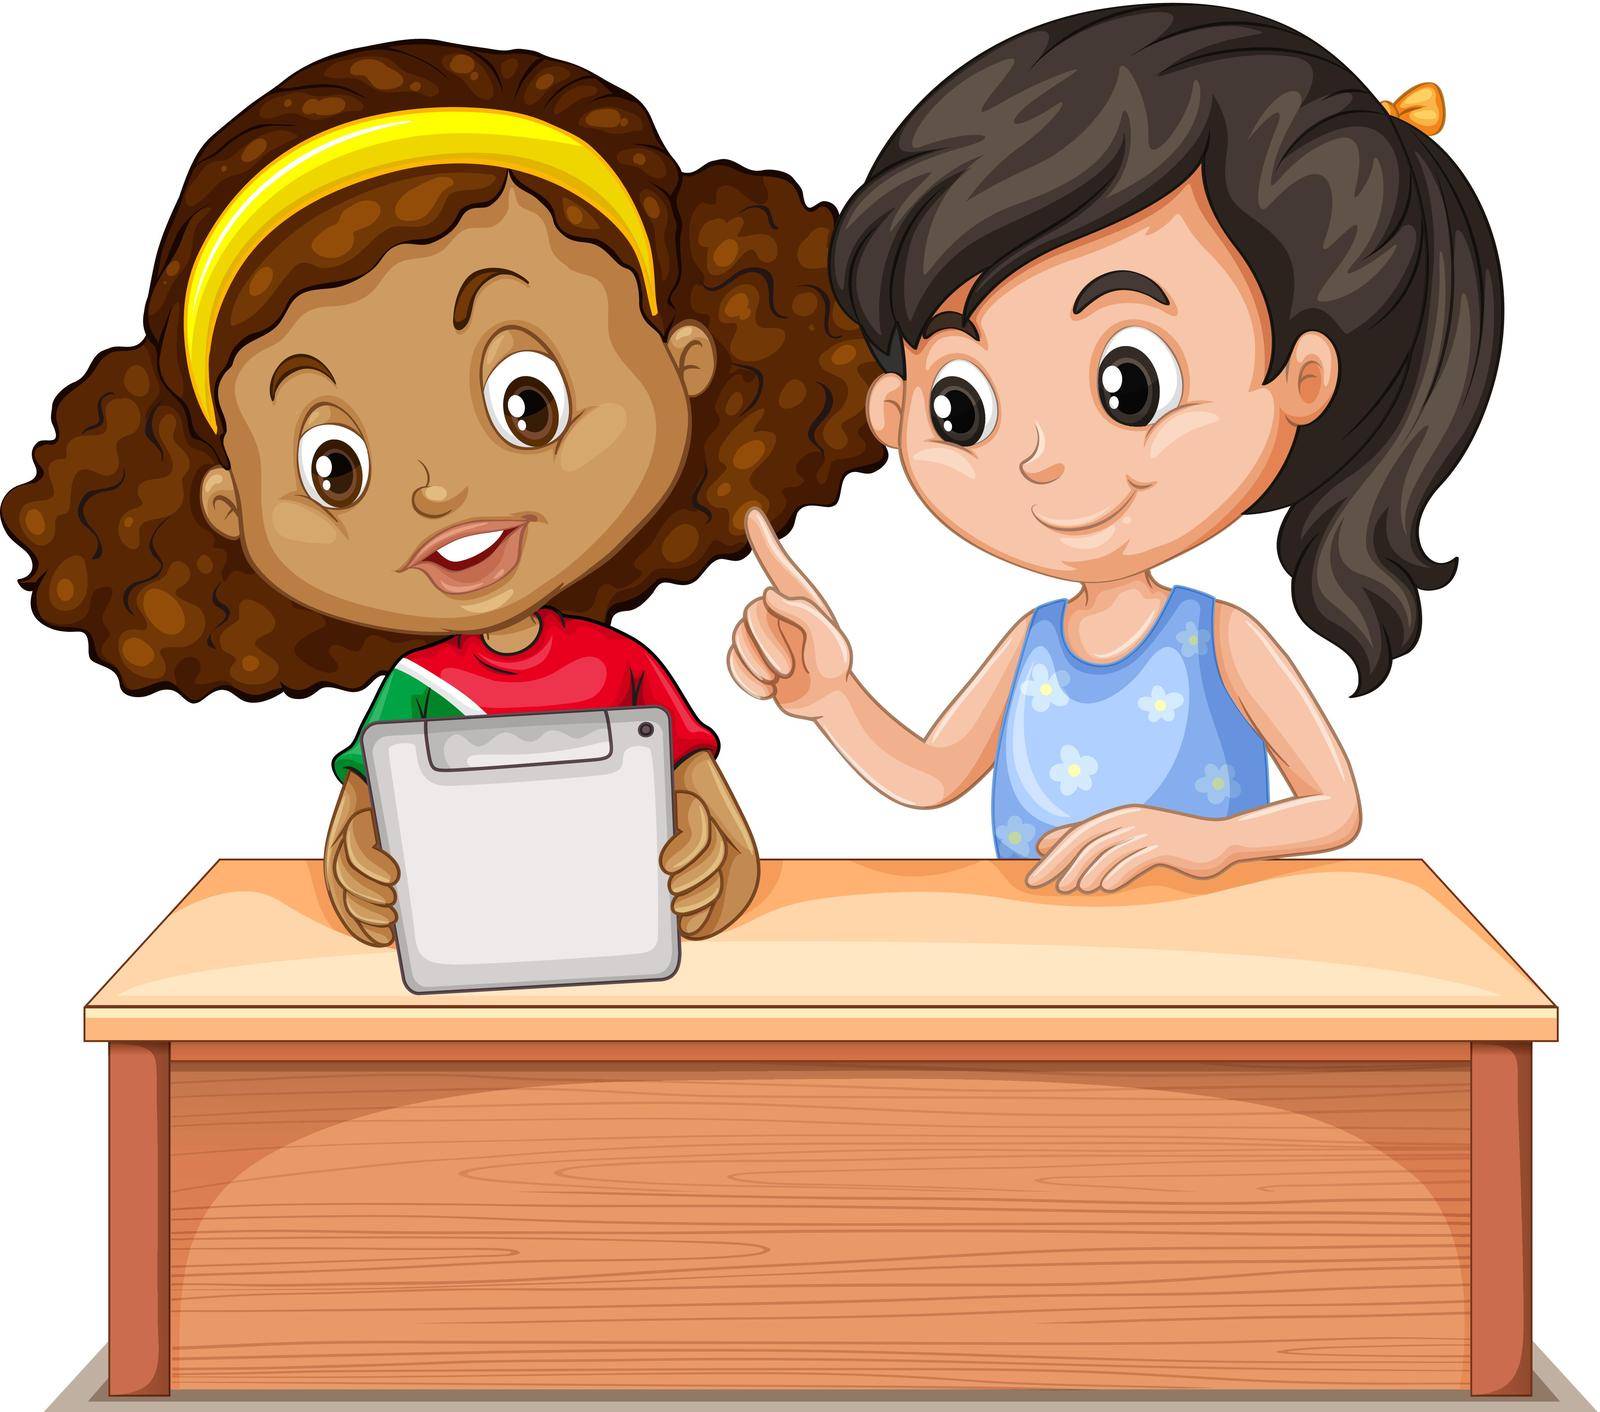 Little girls using computer illustration